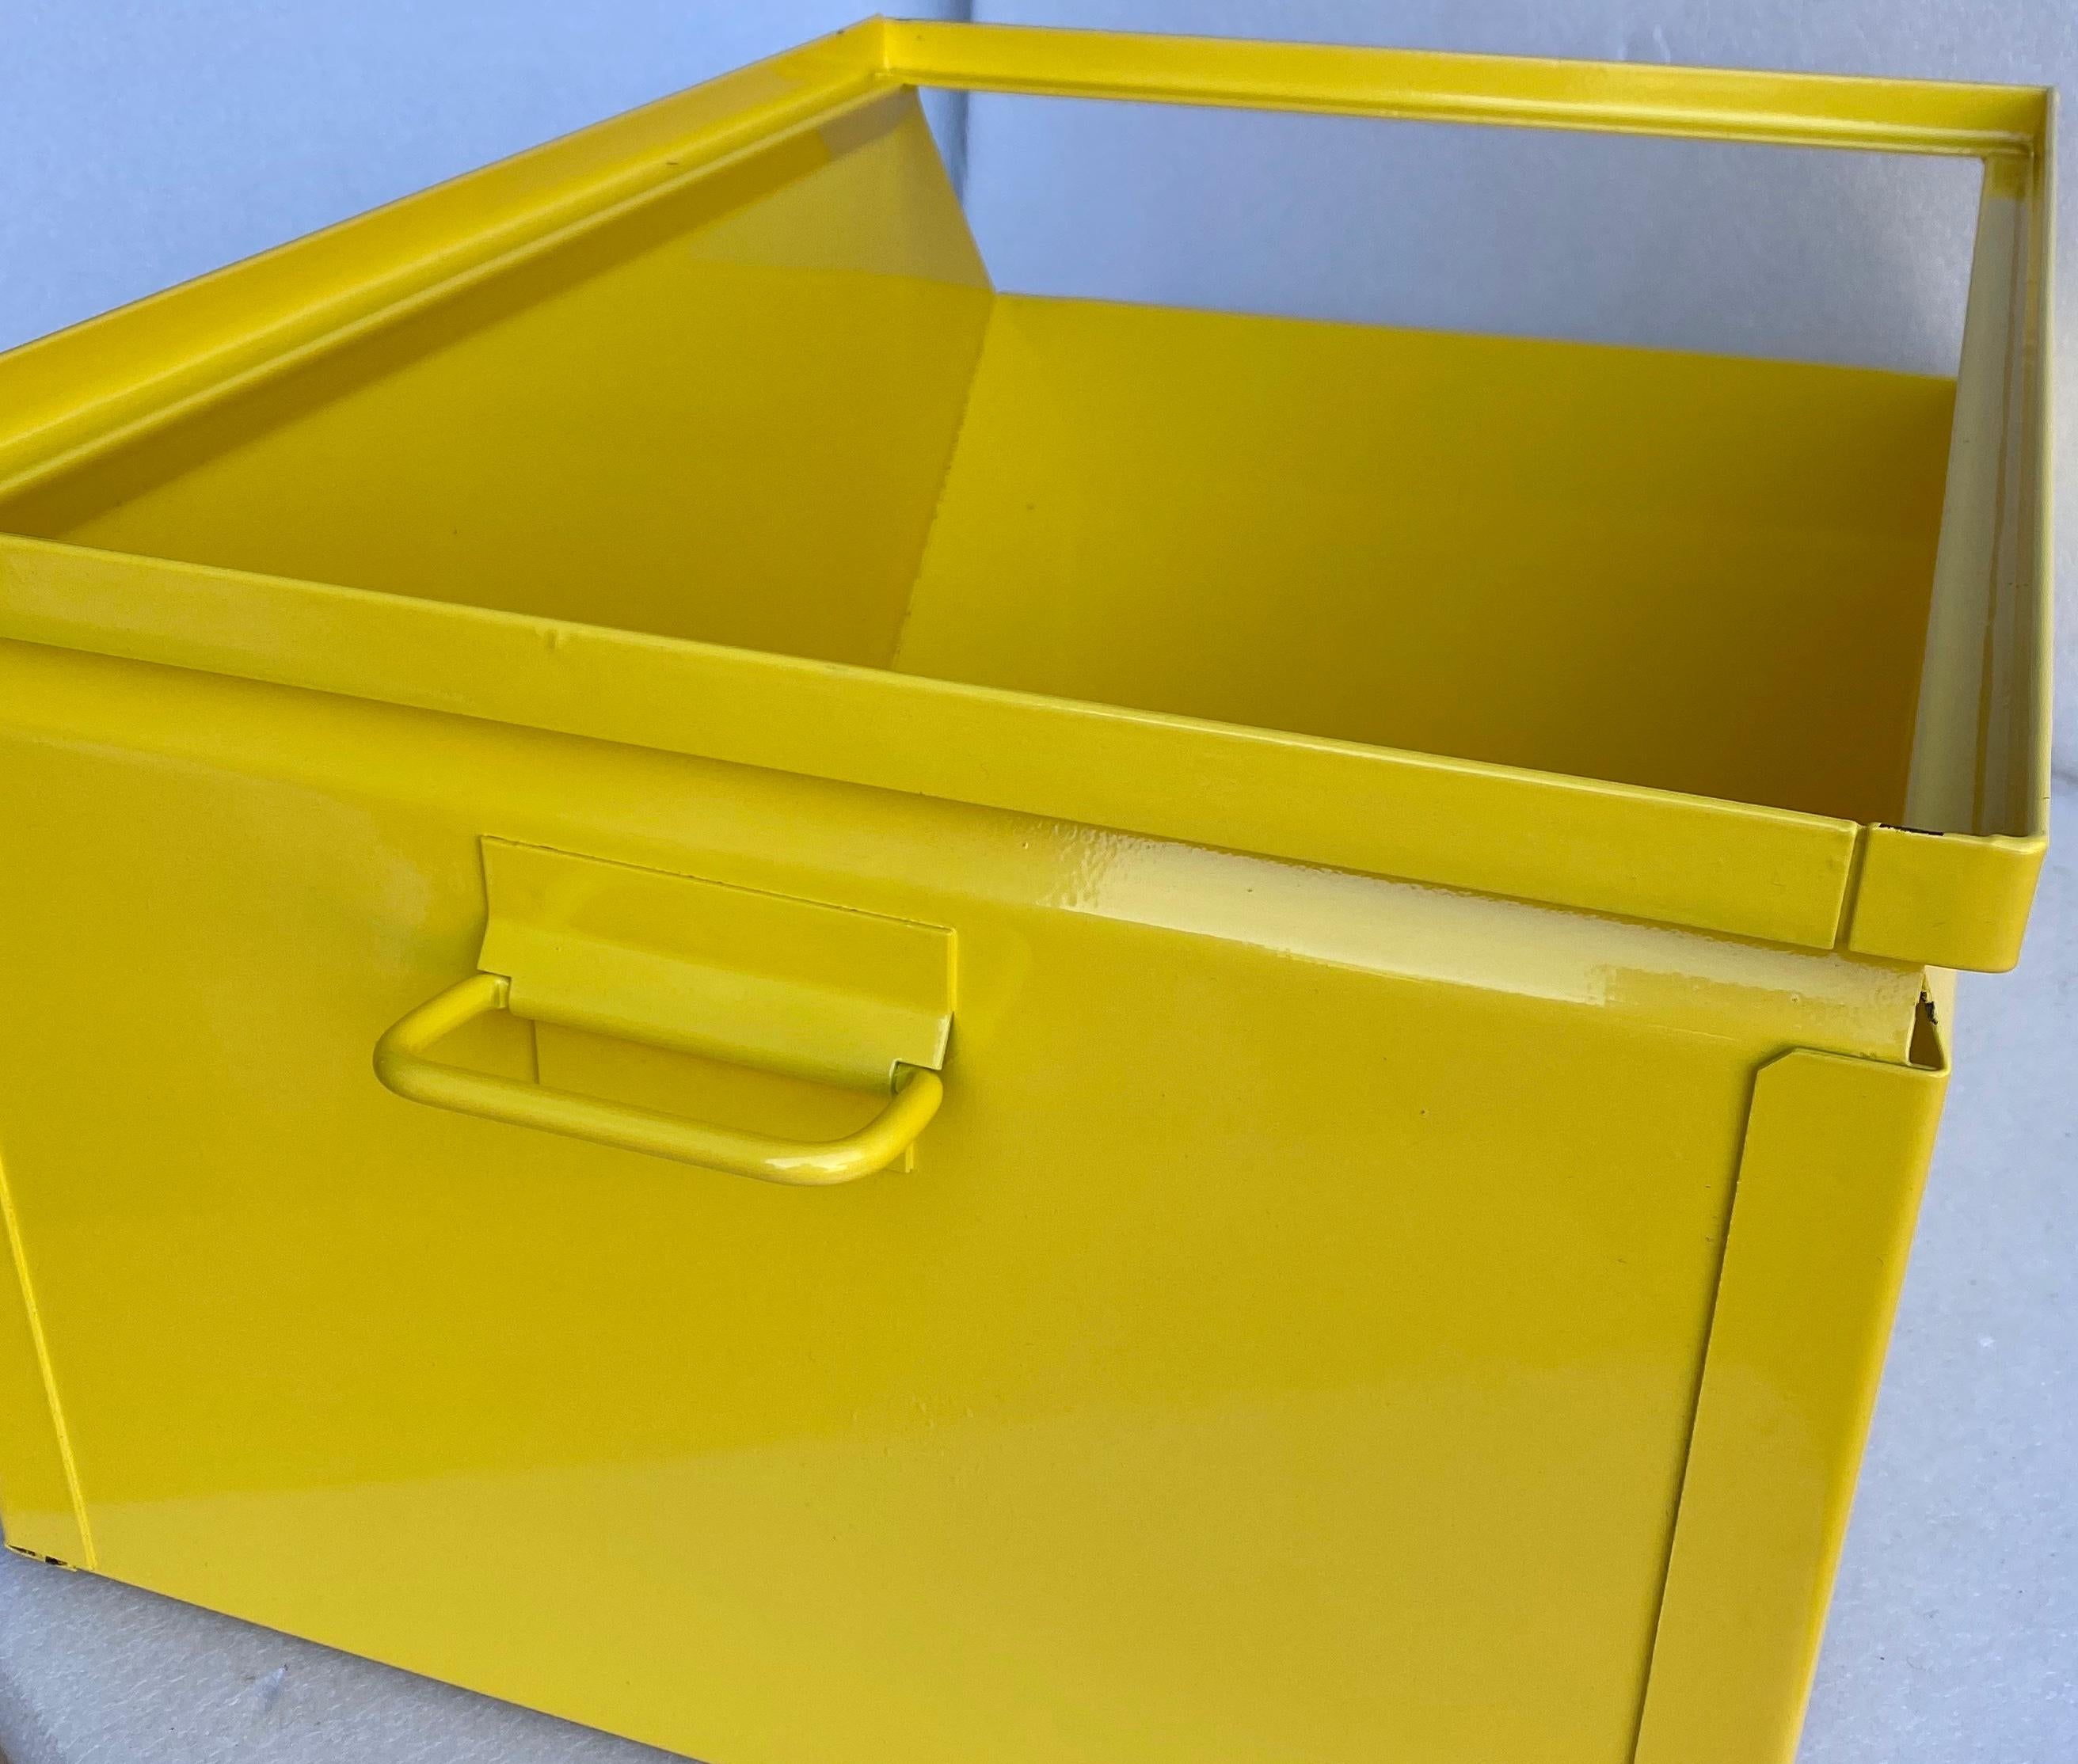 Details about   Yellow Powder-Coated Industrial Metal Storage Bin Tote 2 Handles Rivet Stackable 